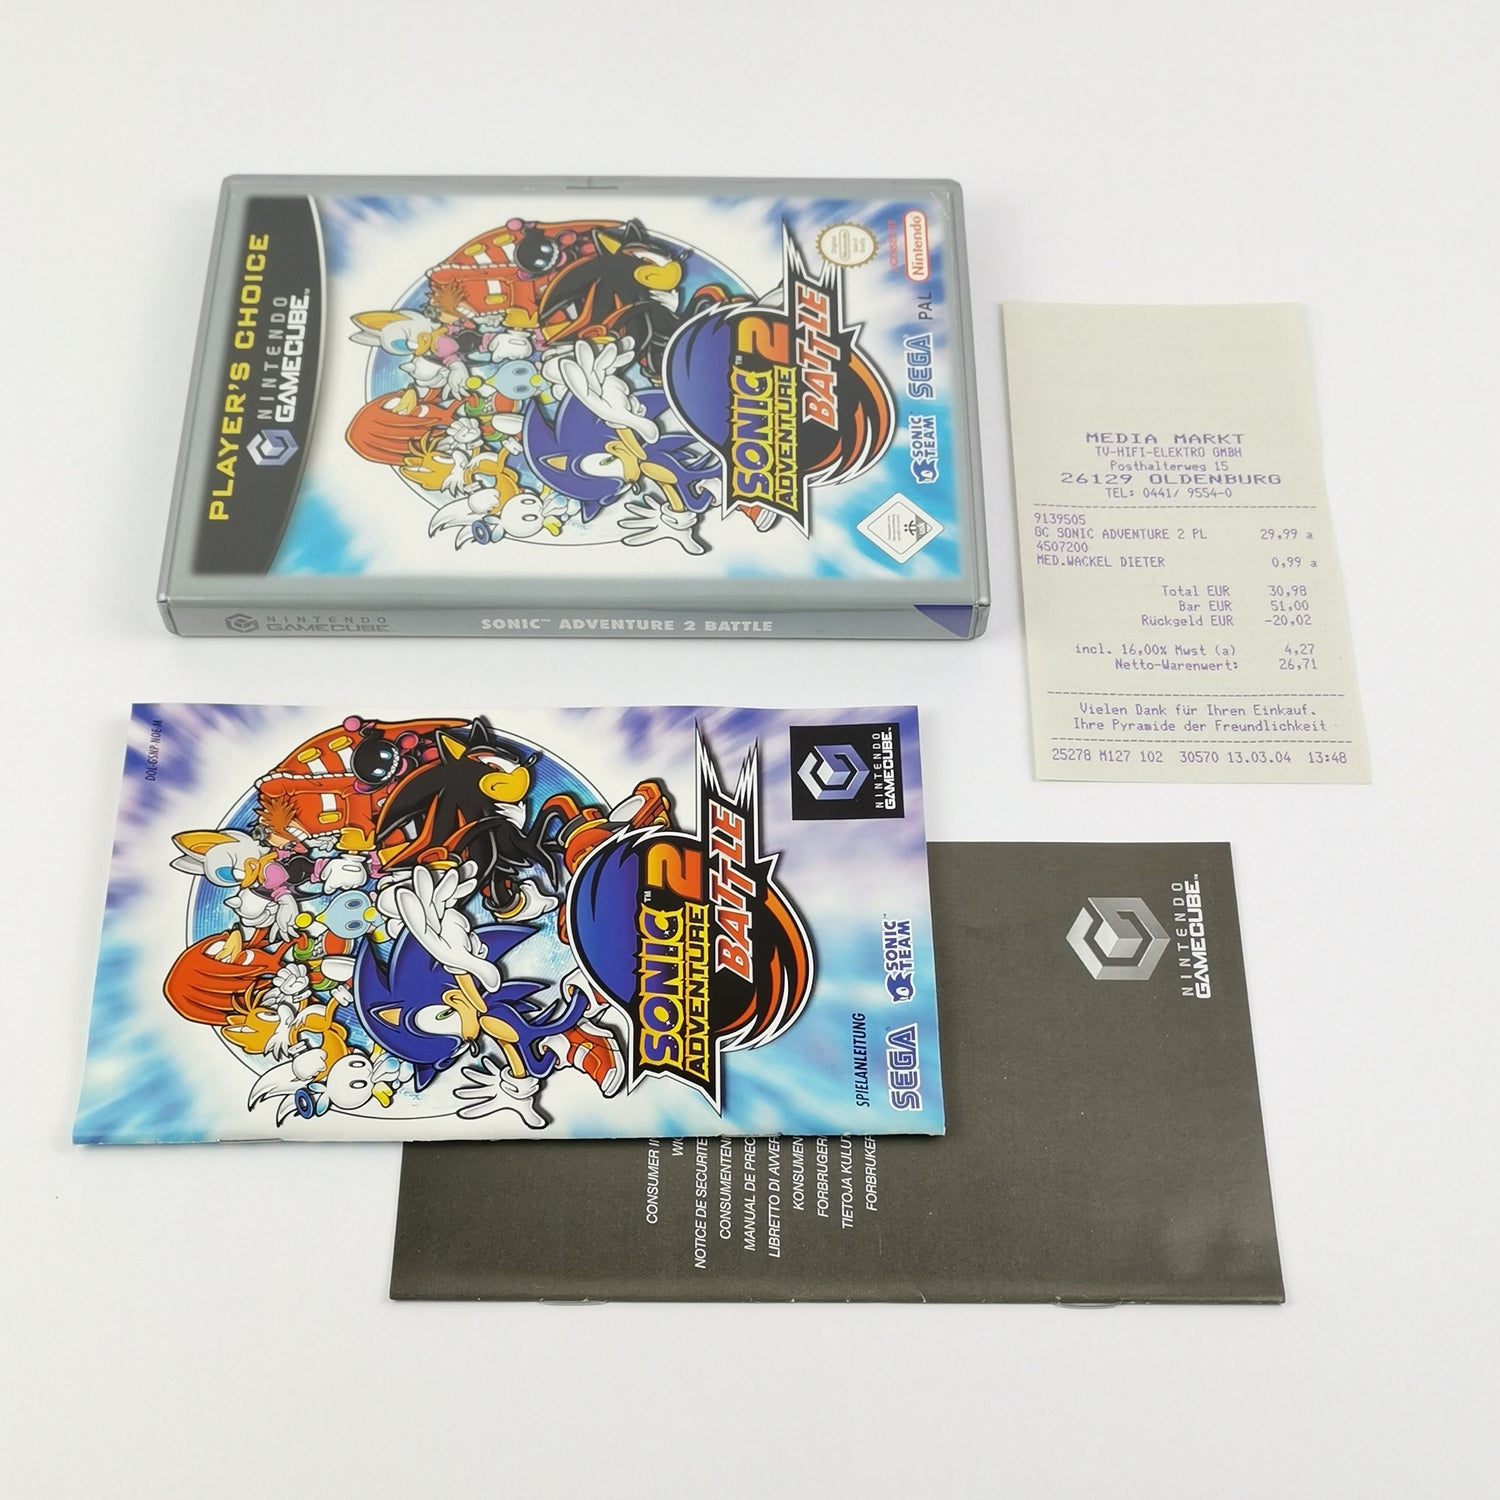 Nintendo Gamecube Game: Sonic Adventure Battle 2 - OVP & Instructions PAL GC Disc